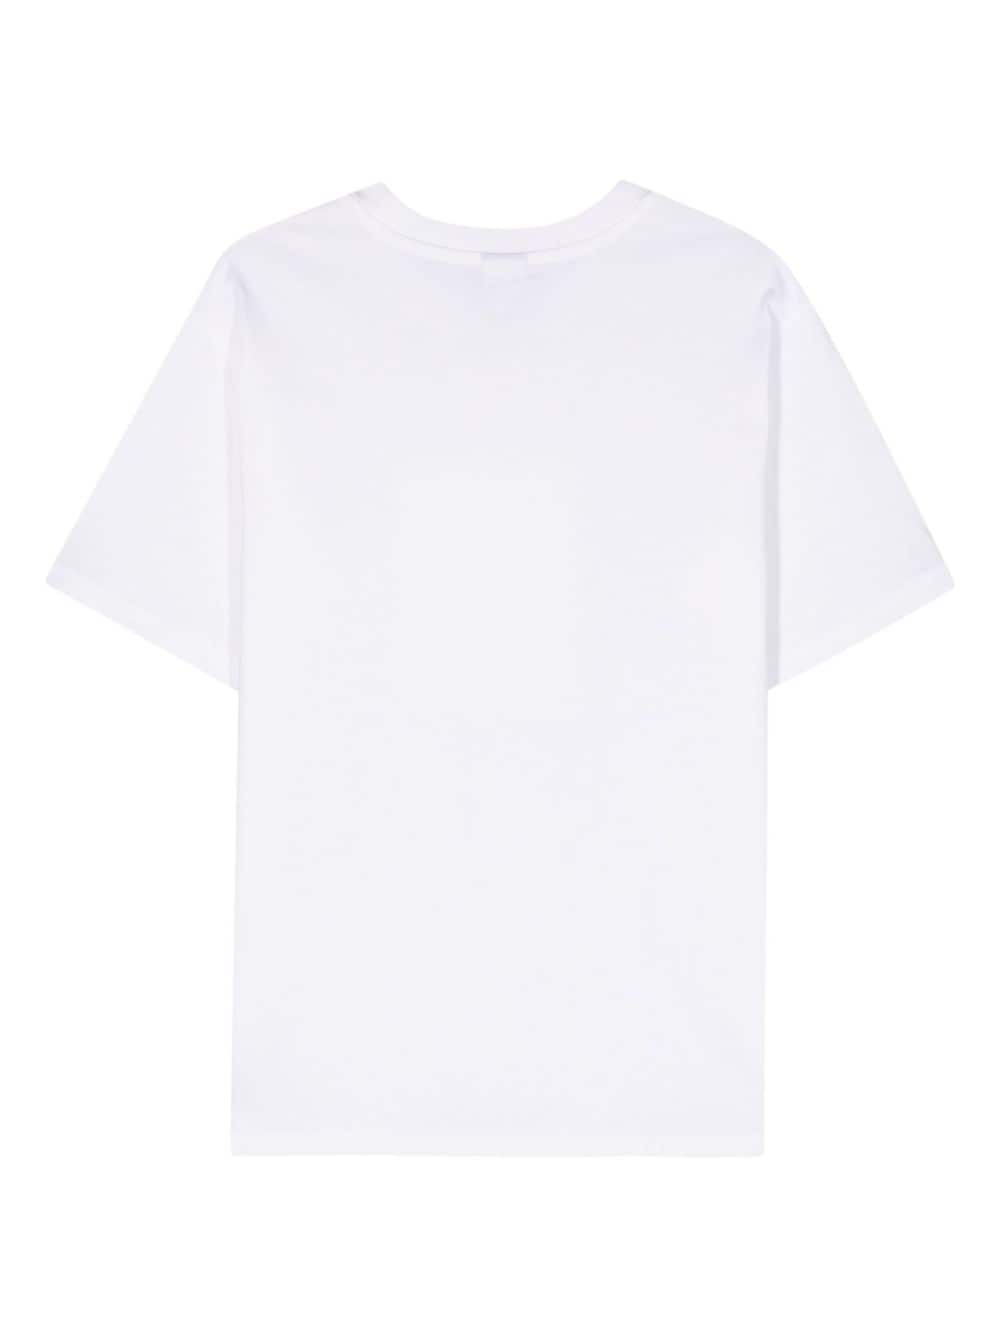 New Balance Katoenen T-shirt Wit